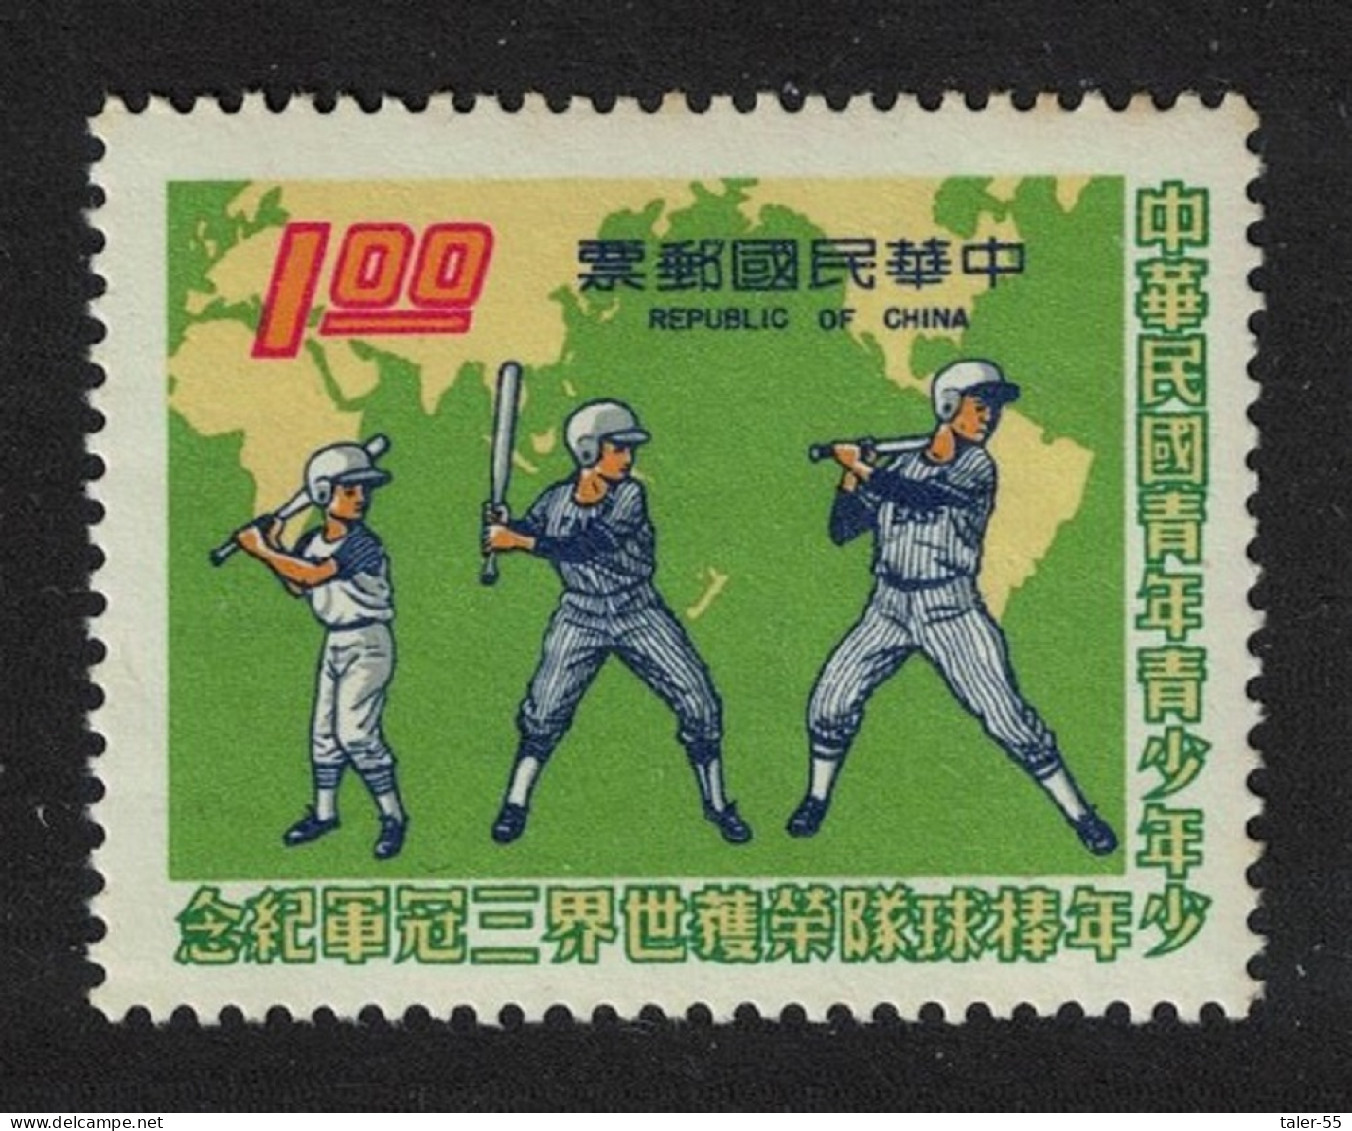 Taiwan Baseball Series USA 1974 MNH SG#1033 - Nuovi